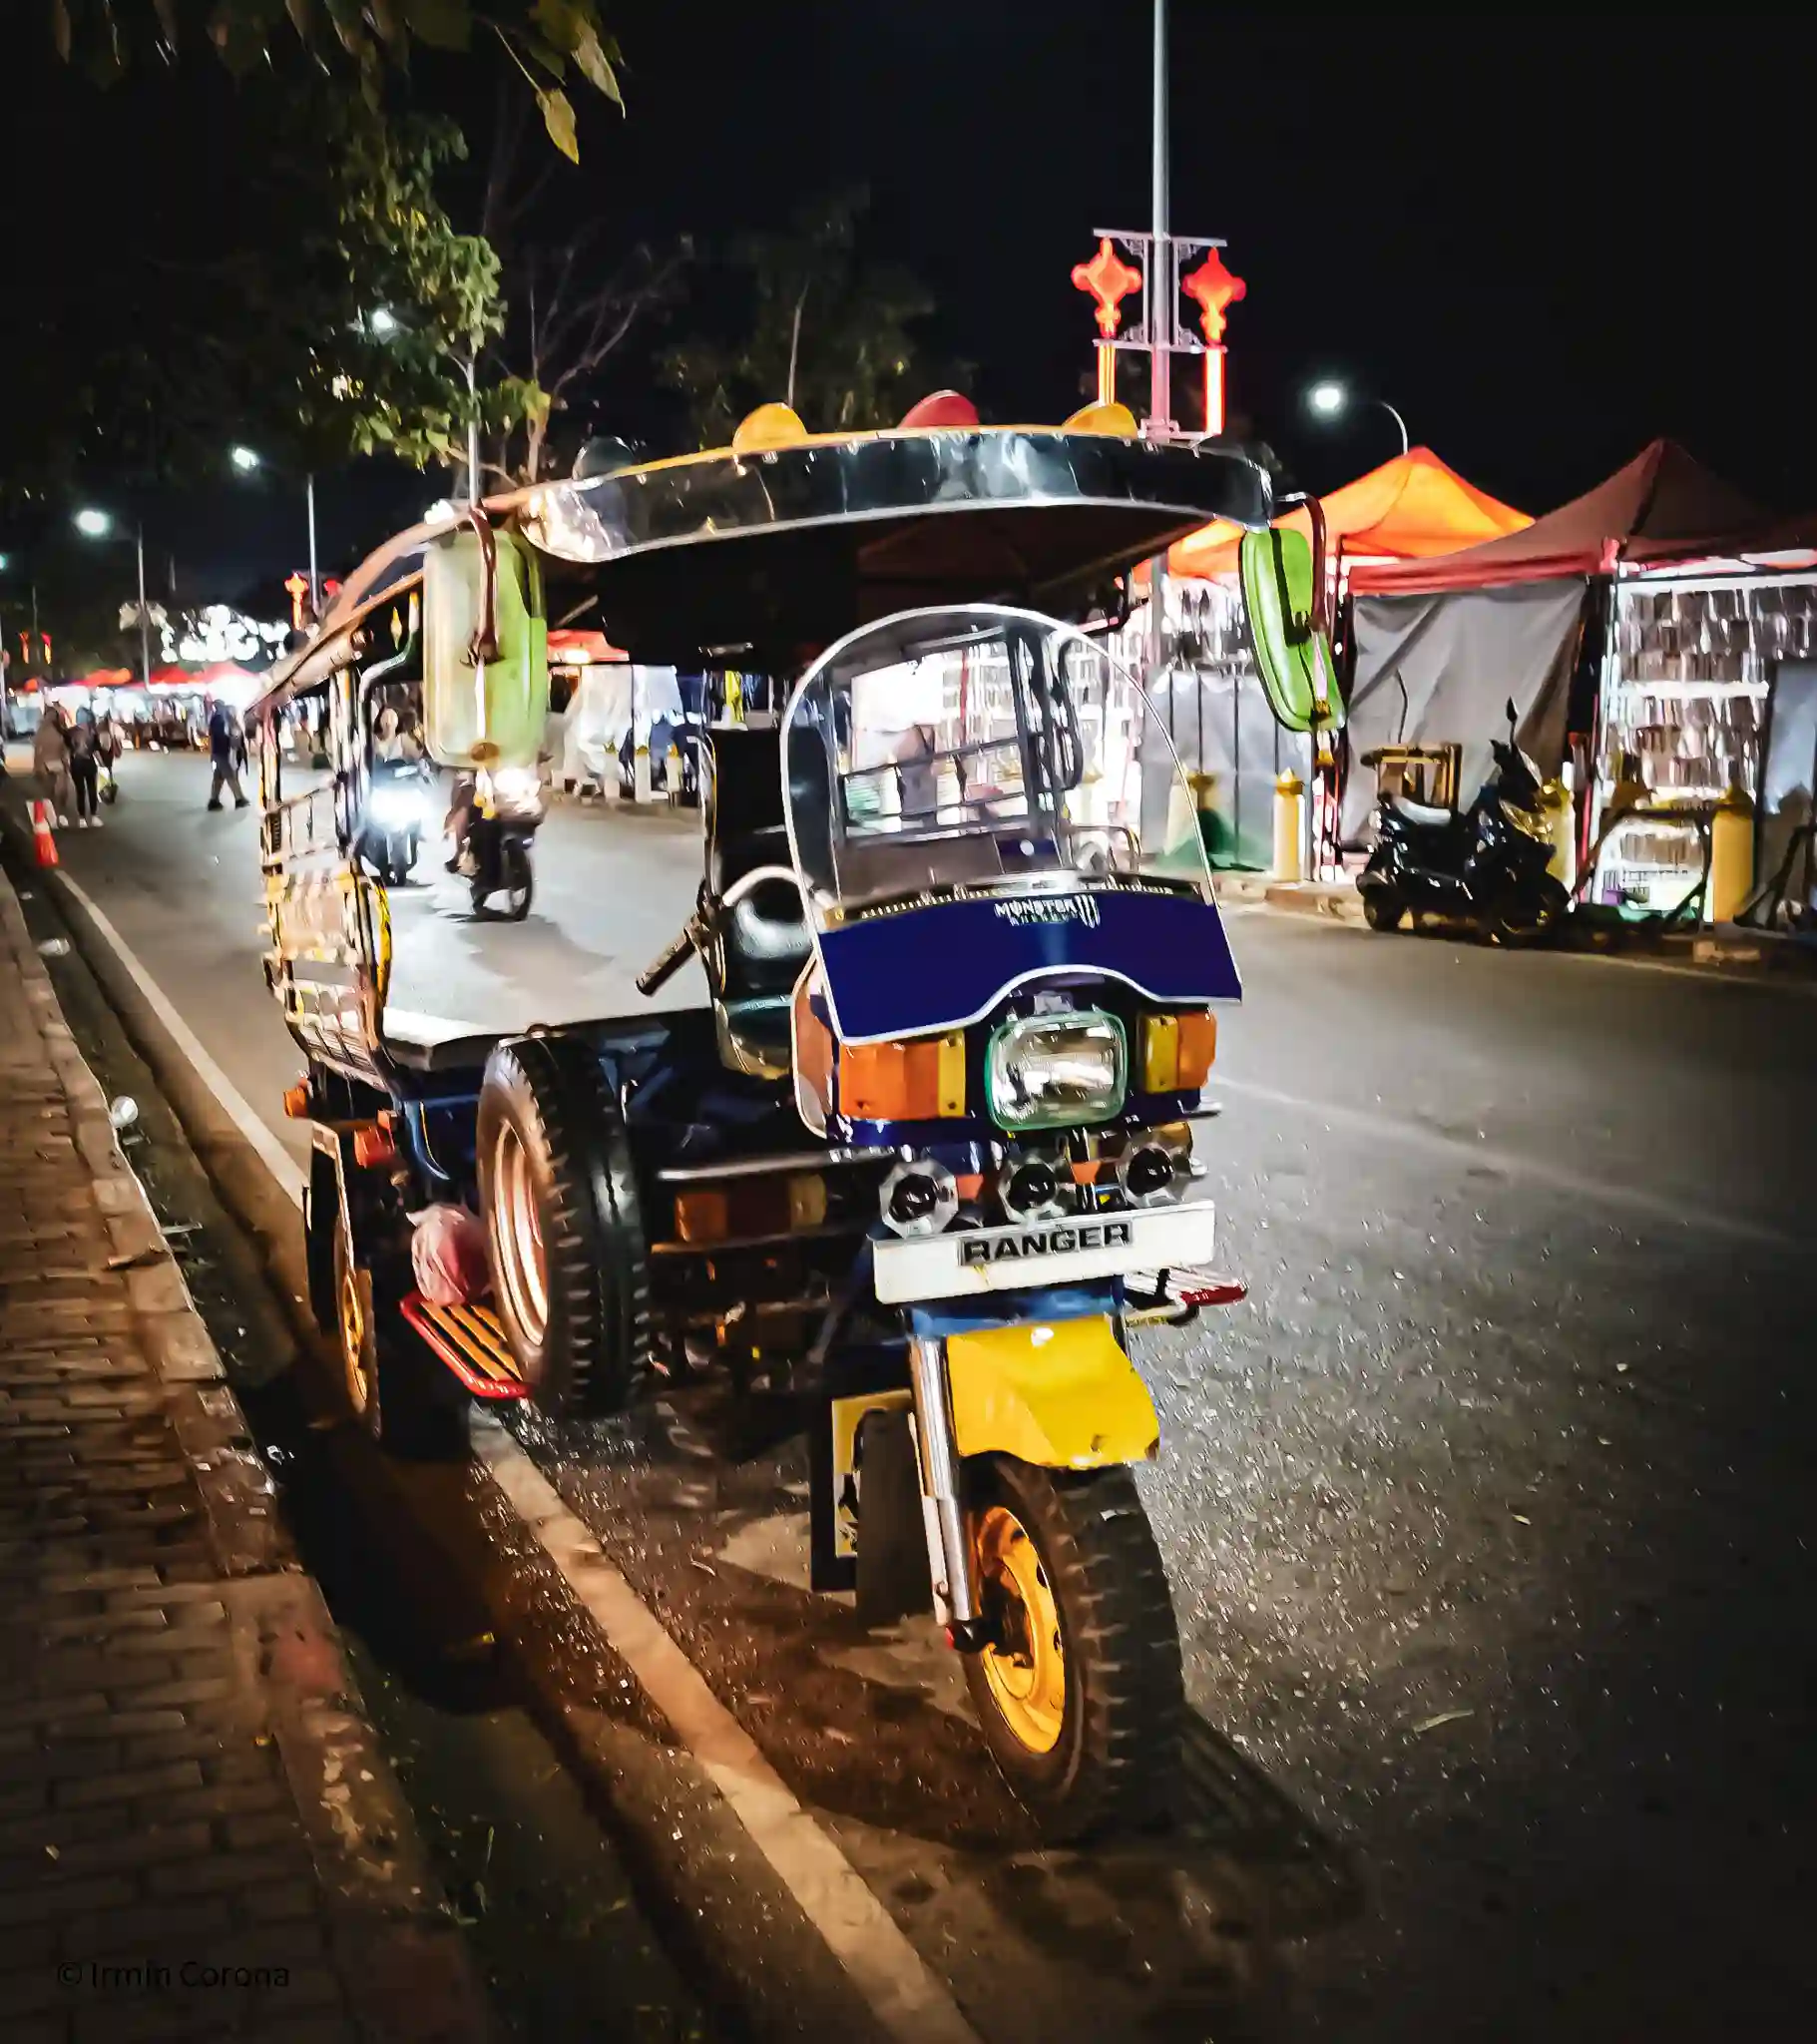 Buying a Motorbike in Laos